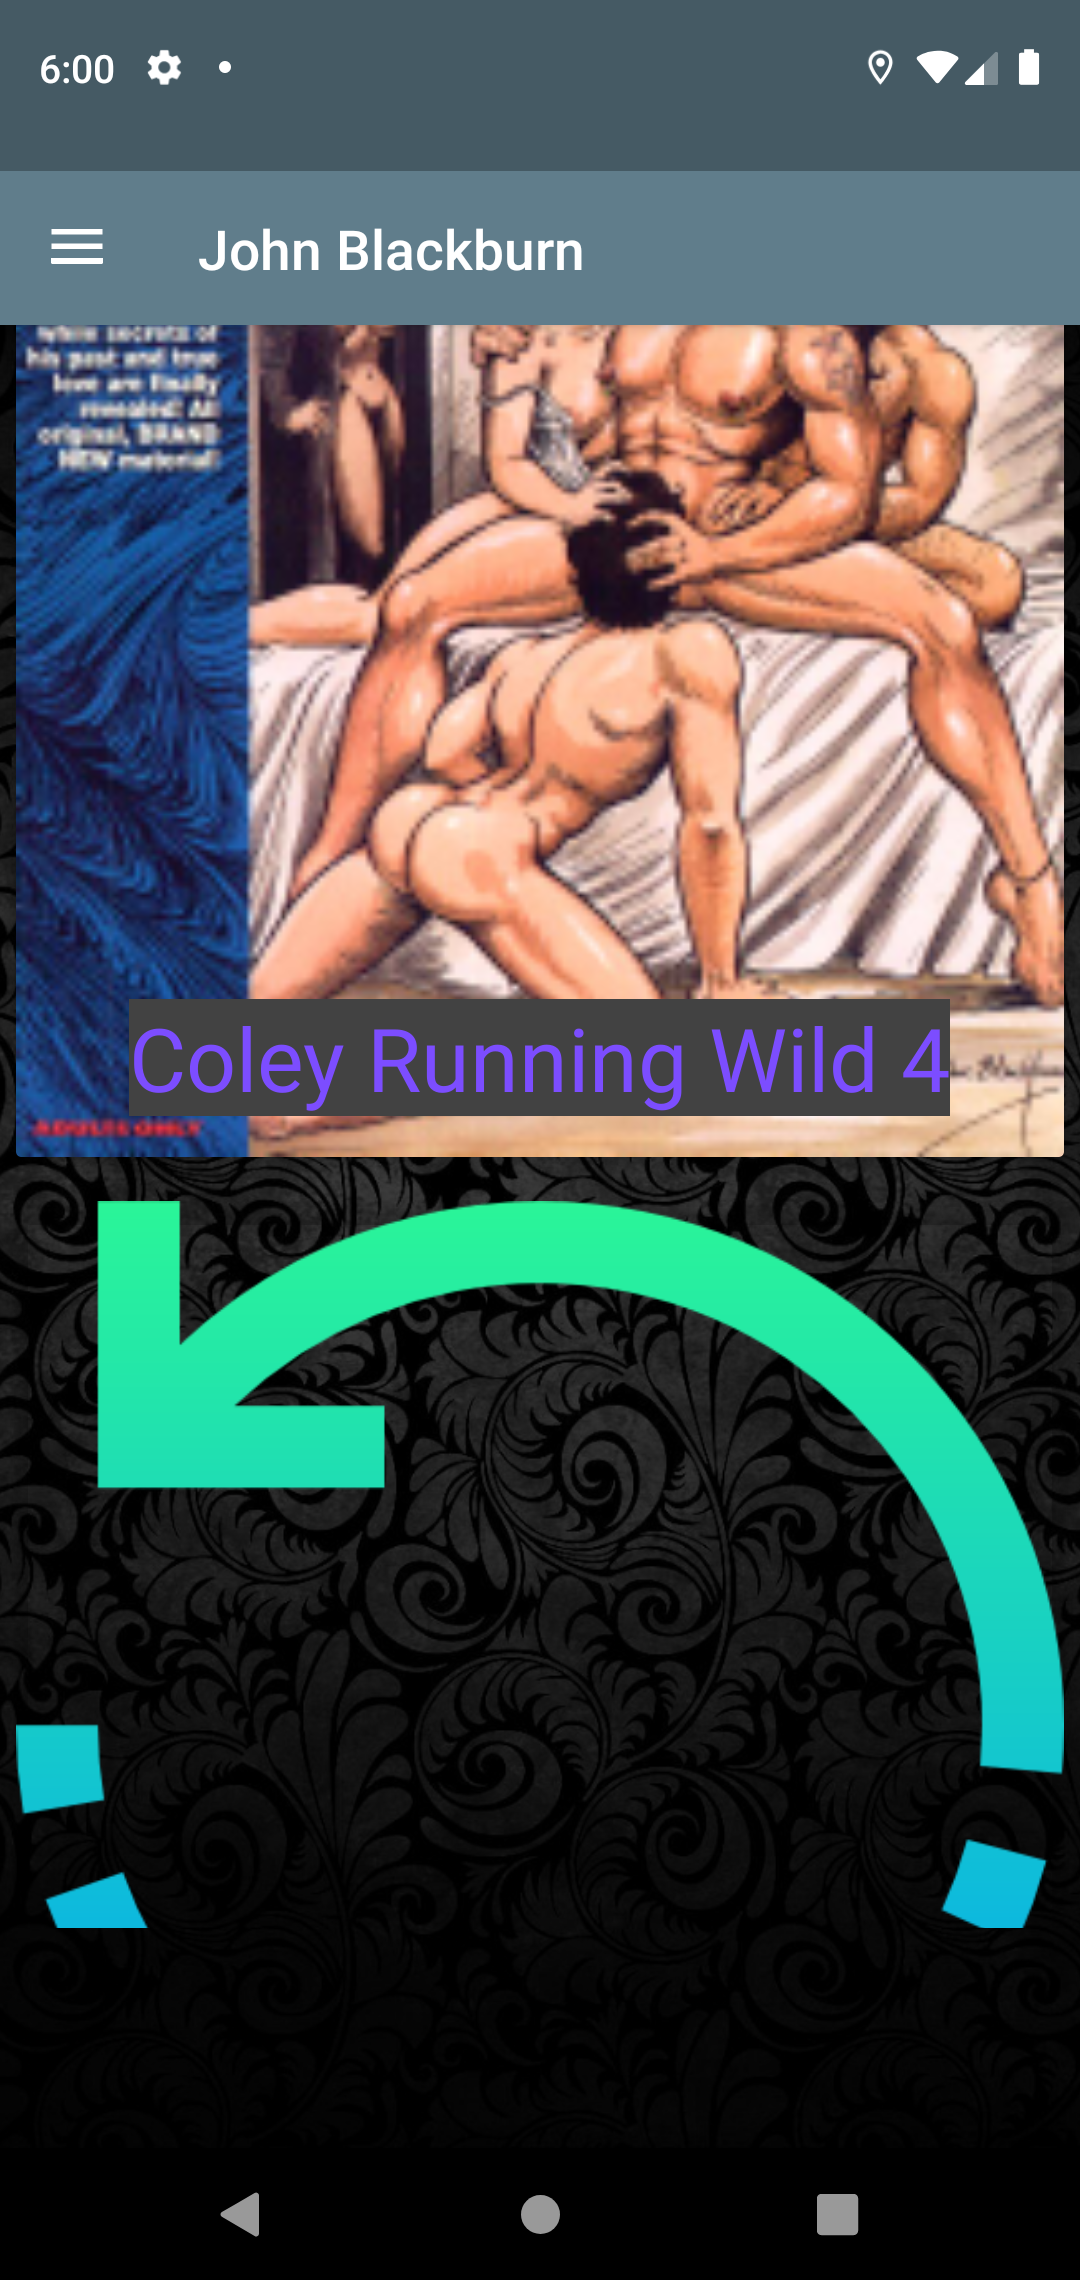 Coley Running Wild манга,app,pegging,gallery,comics,adult,bondage,blackburn,pic,pornstar,john,sissy,download,gay,beta,picture,strapon,pics,hentai,yaoi,anime,search,android,comic,страпон,manga,galleries,hintai,apps